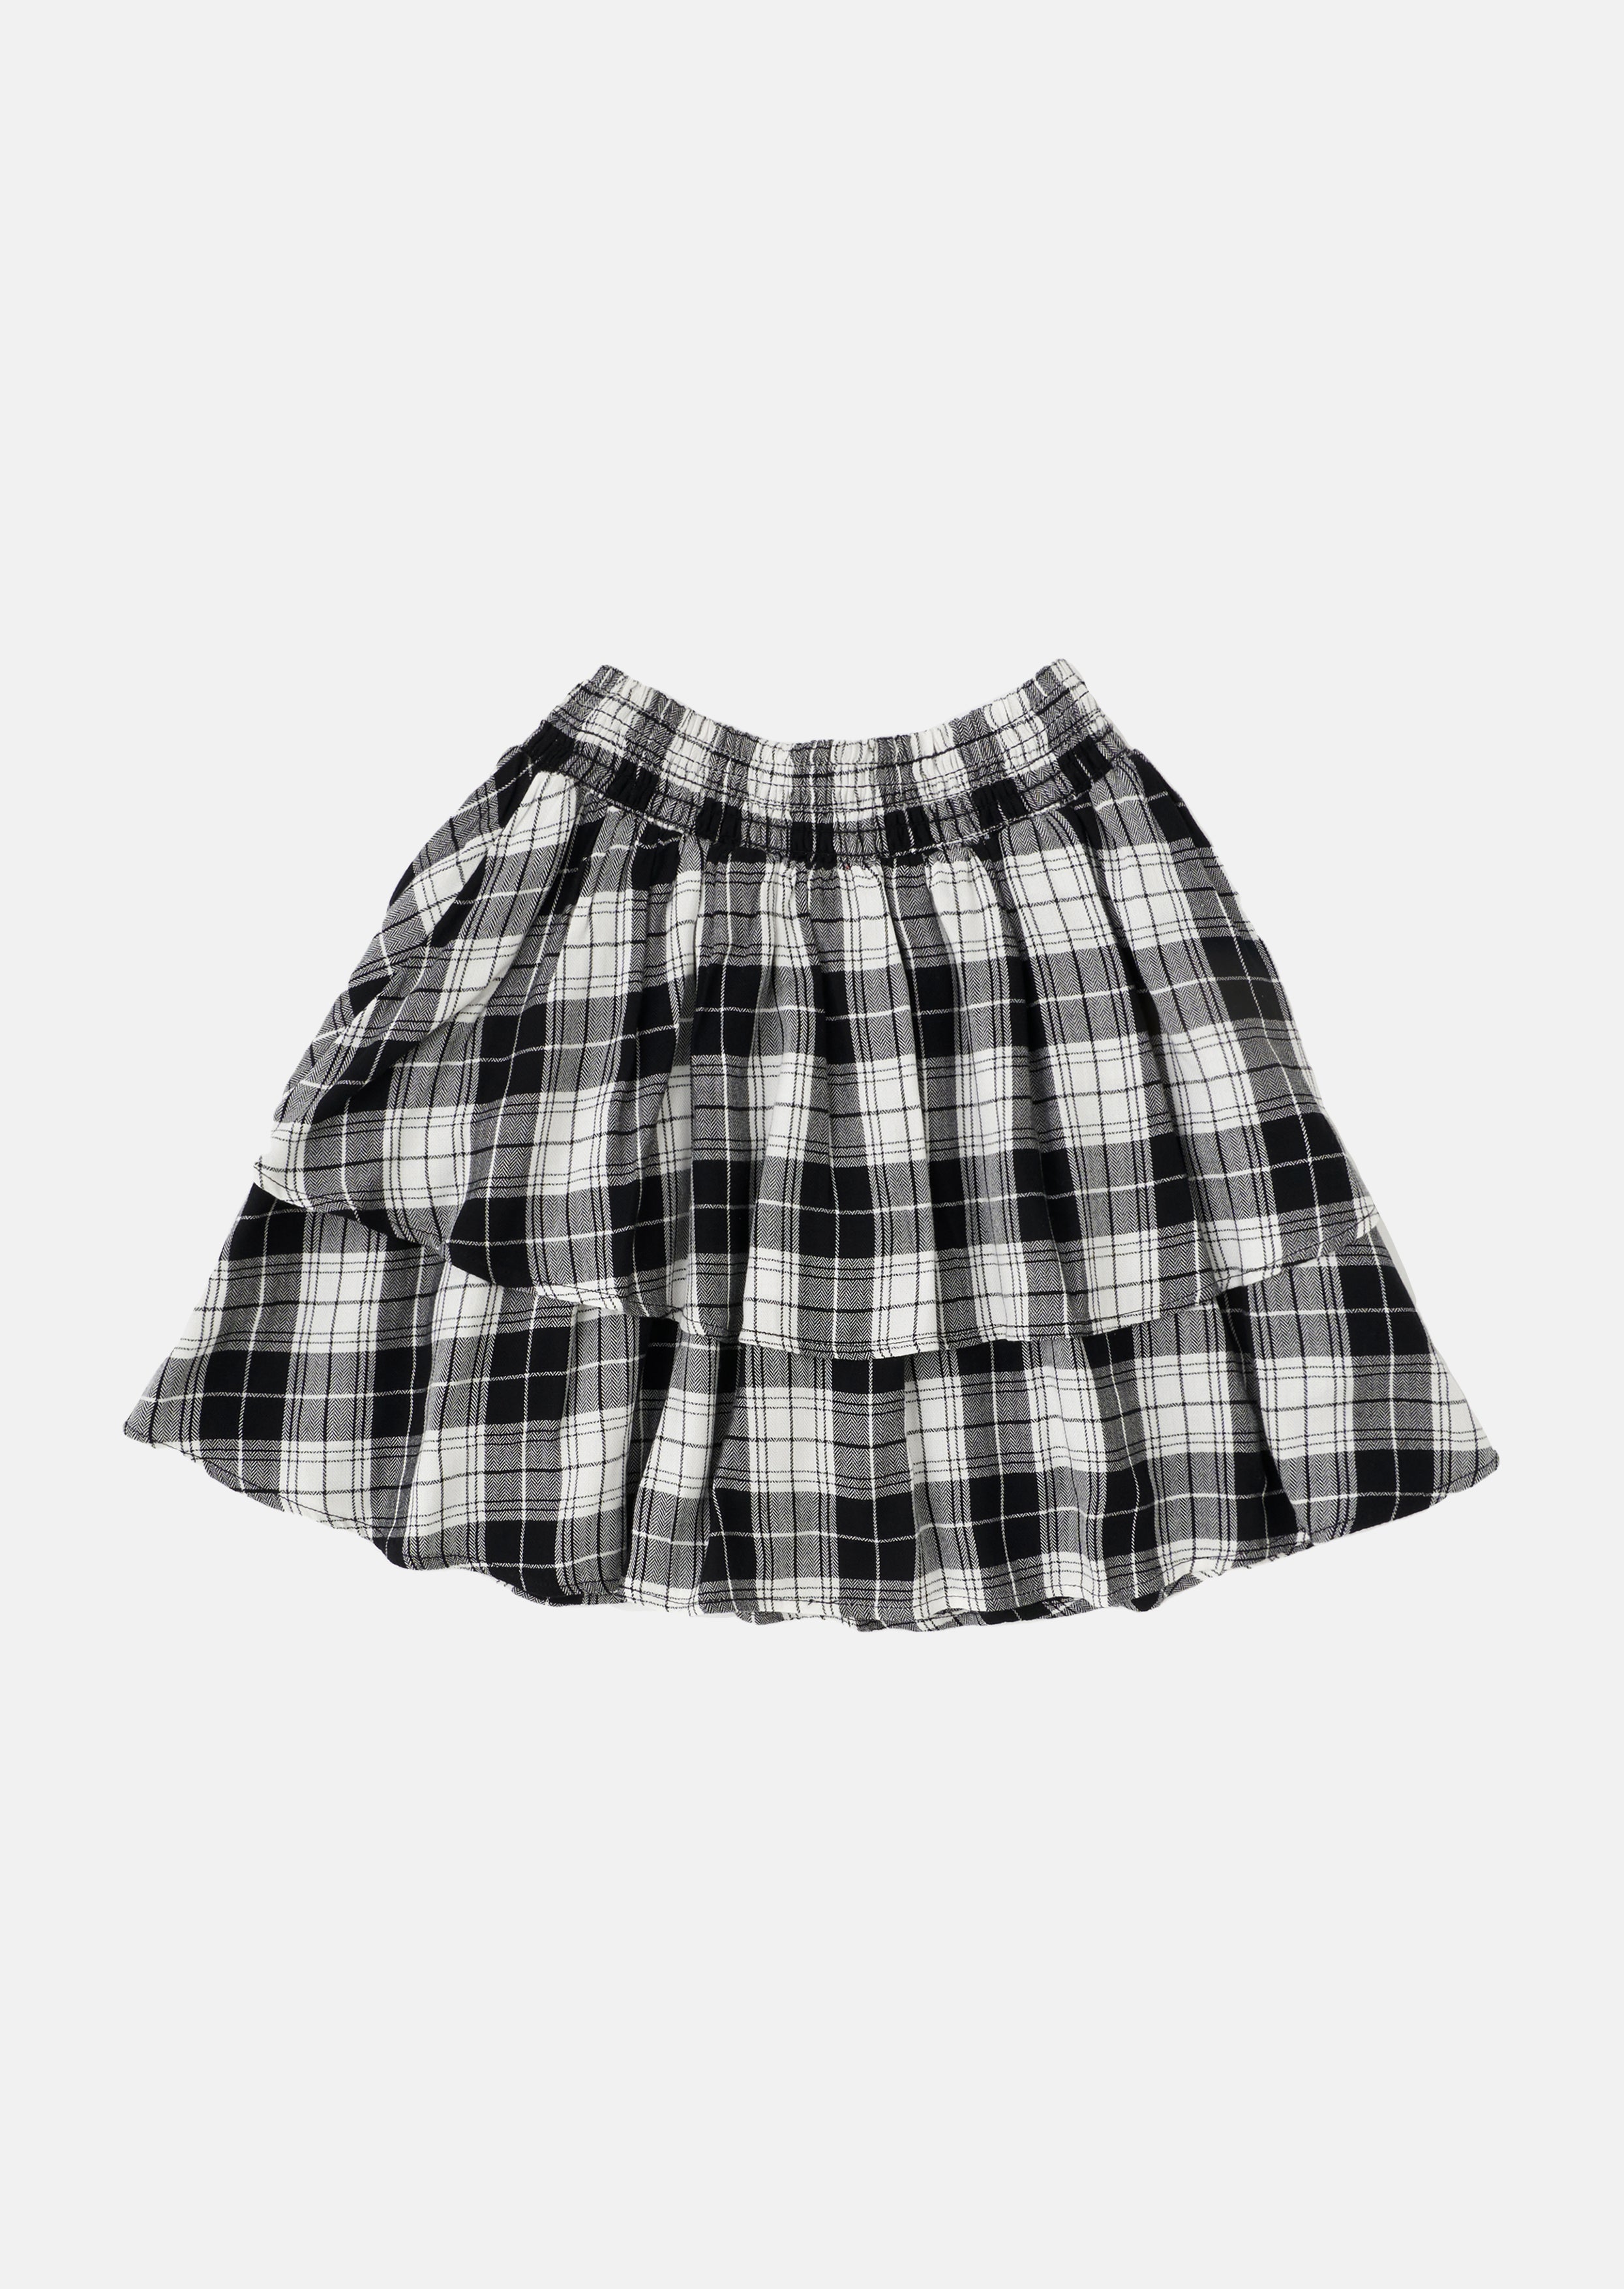 Girls Black and White Checked Skirt